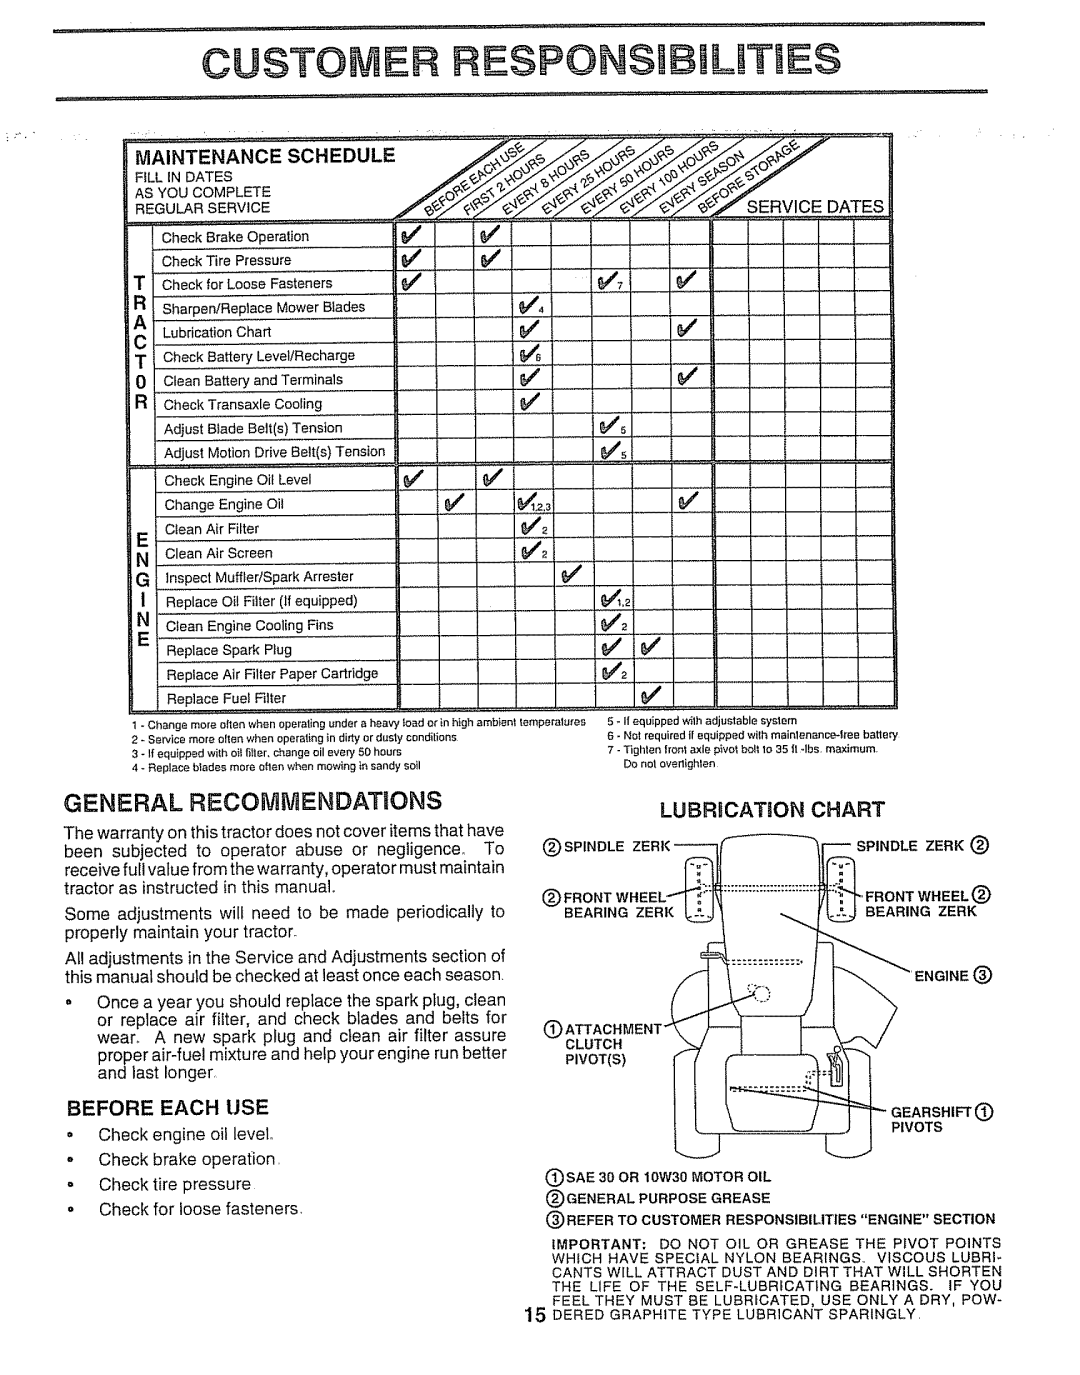 Sears 917.257552 Custo, Espons!B Uties, General Recommendatuons, N _ceanAirScreen, Before Each Use, Lubrication Chart 